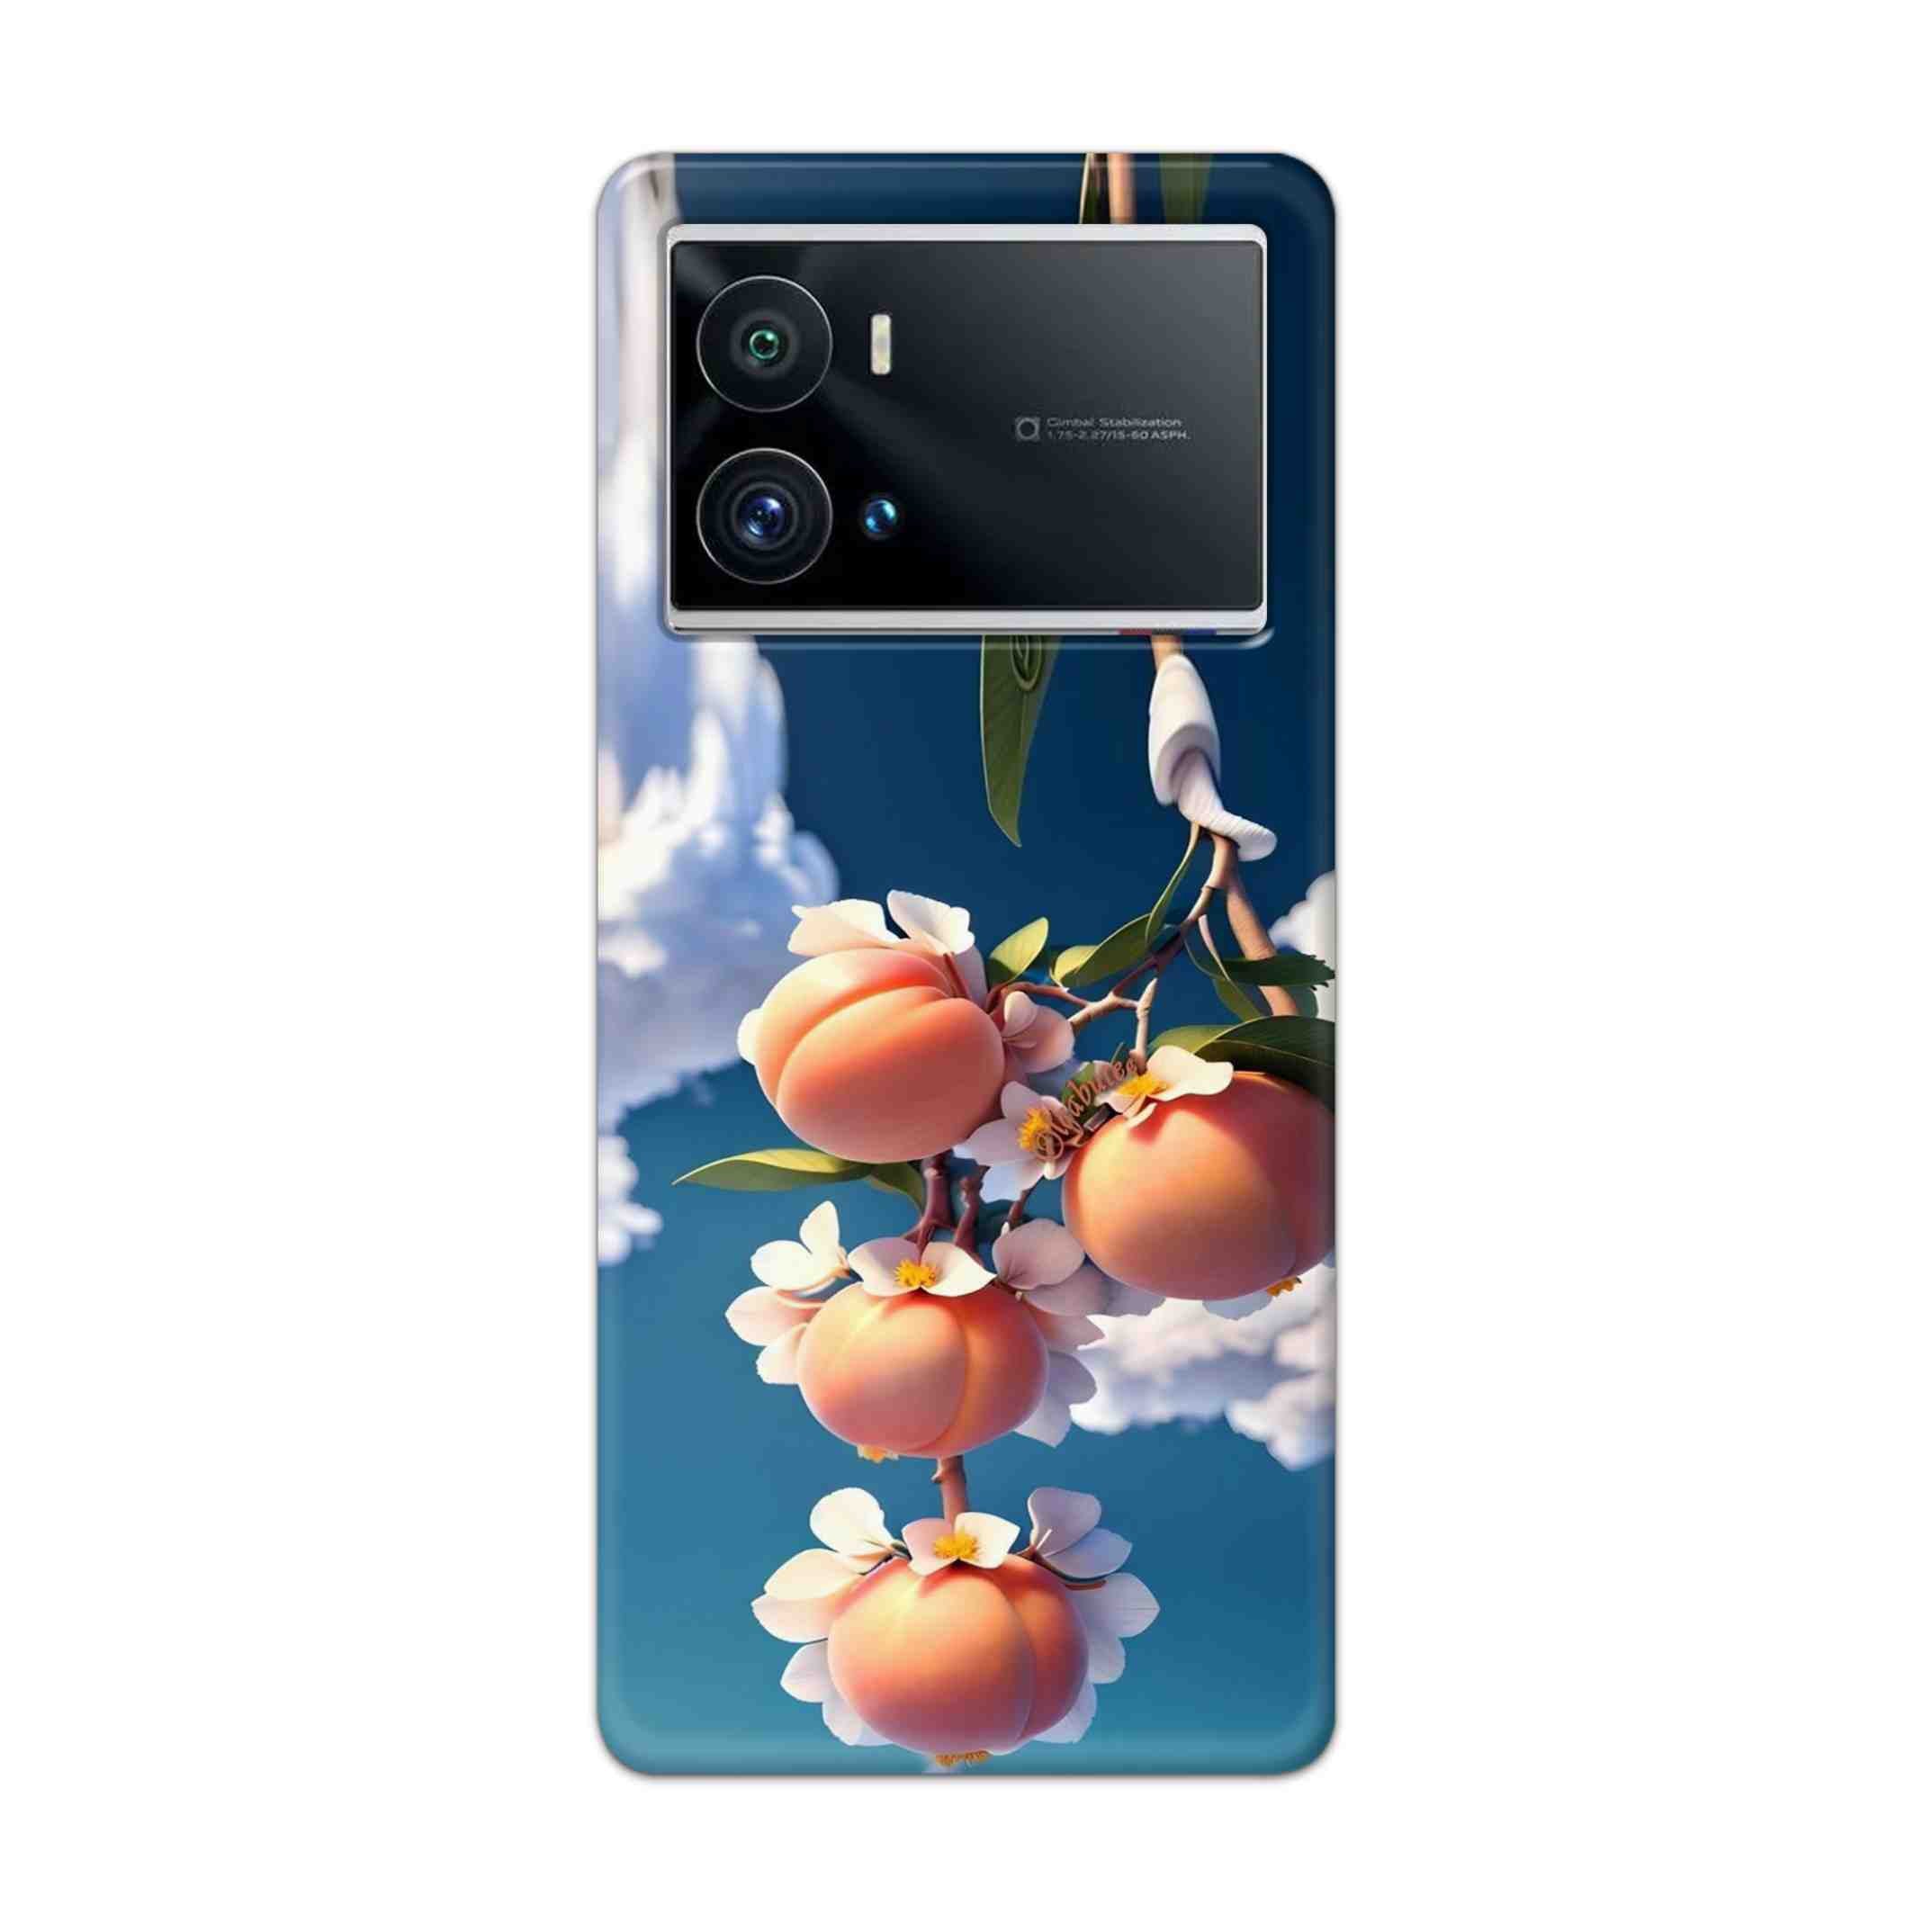 Buy Fruit Hard Back Mobile Phone Case Cover For iQOO 9 Pro 5G Online